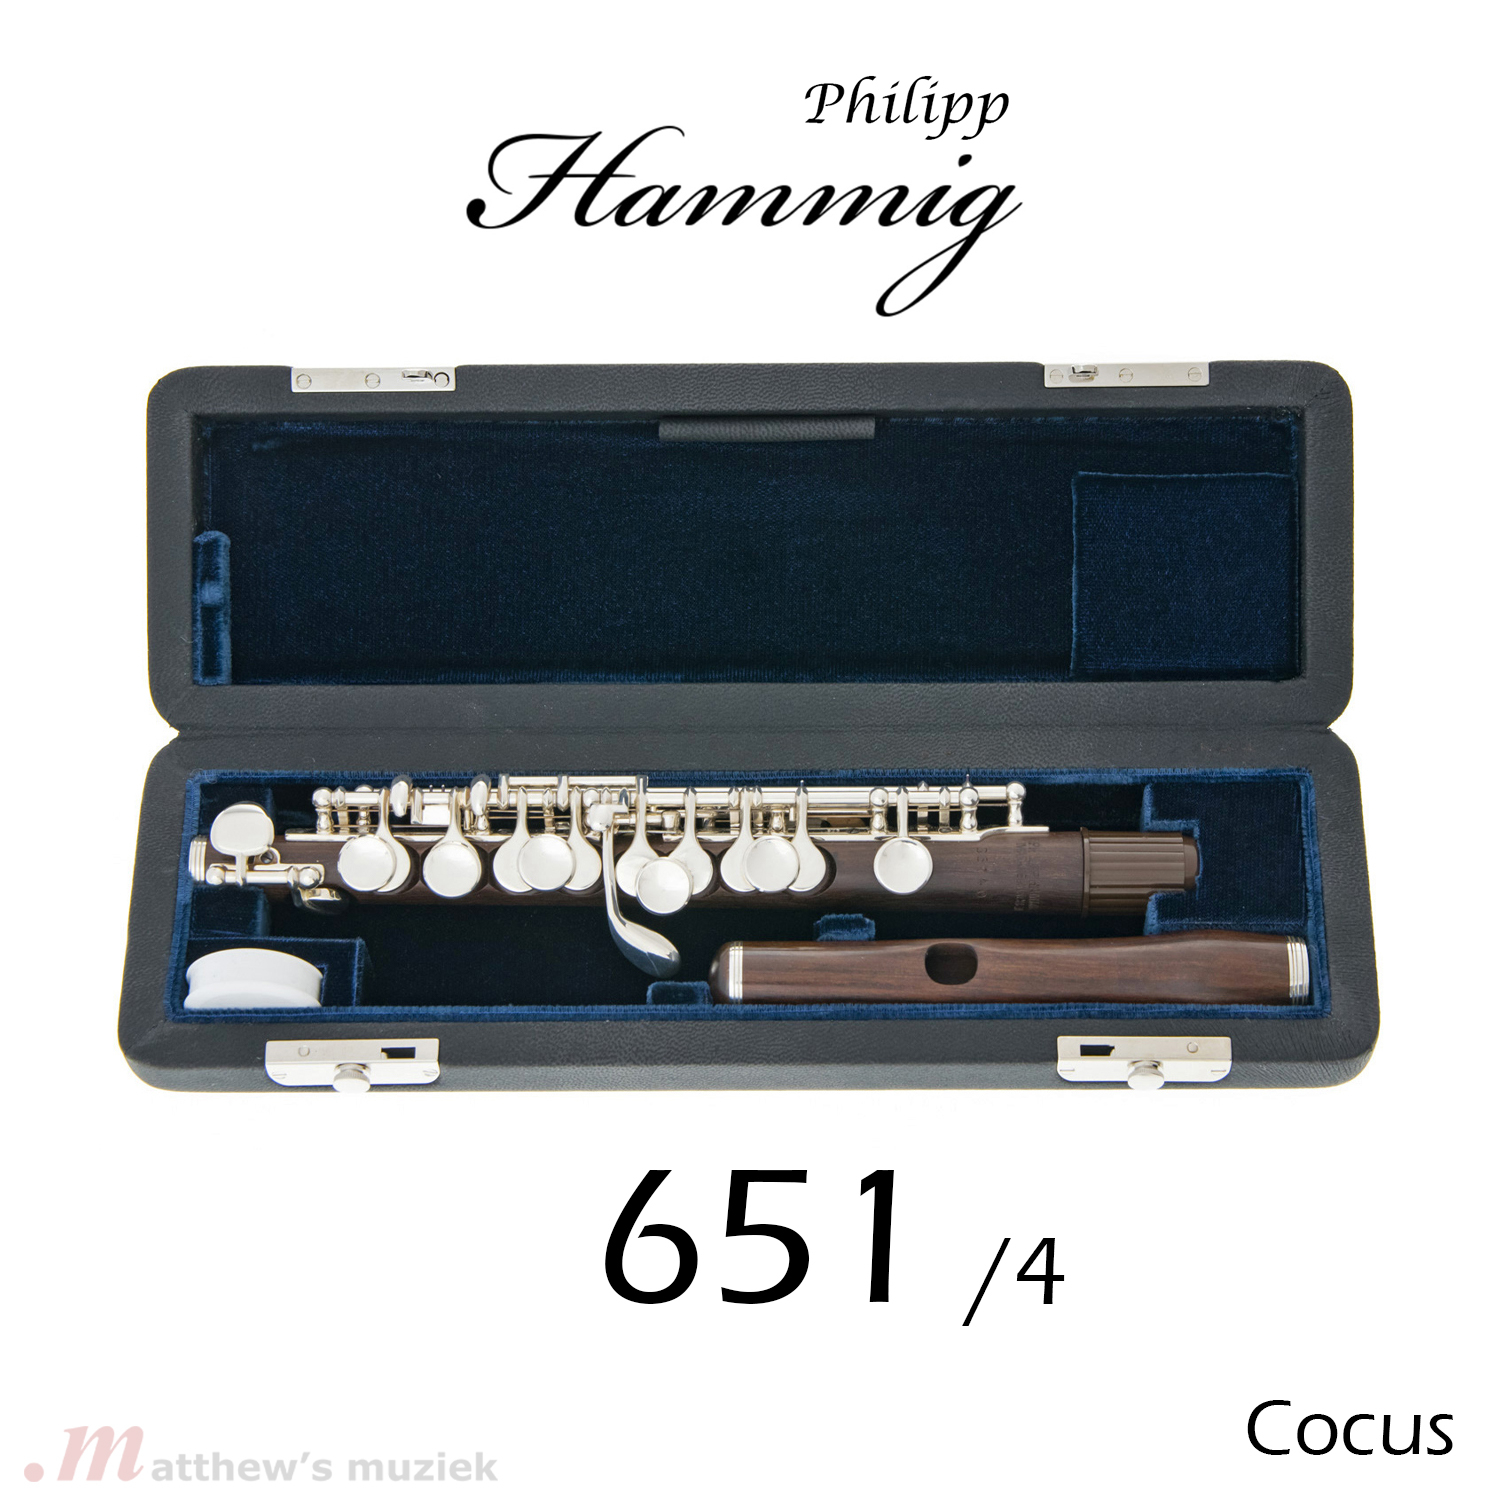 Philipp Hammig Piccolo - 651/4 Cocus Wood